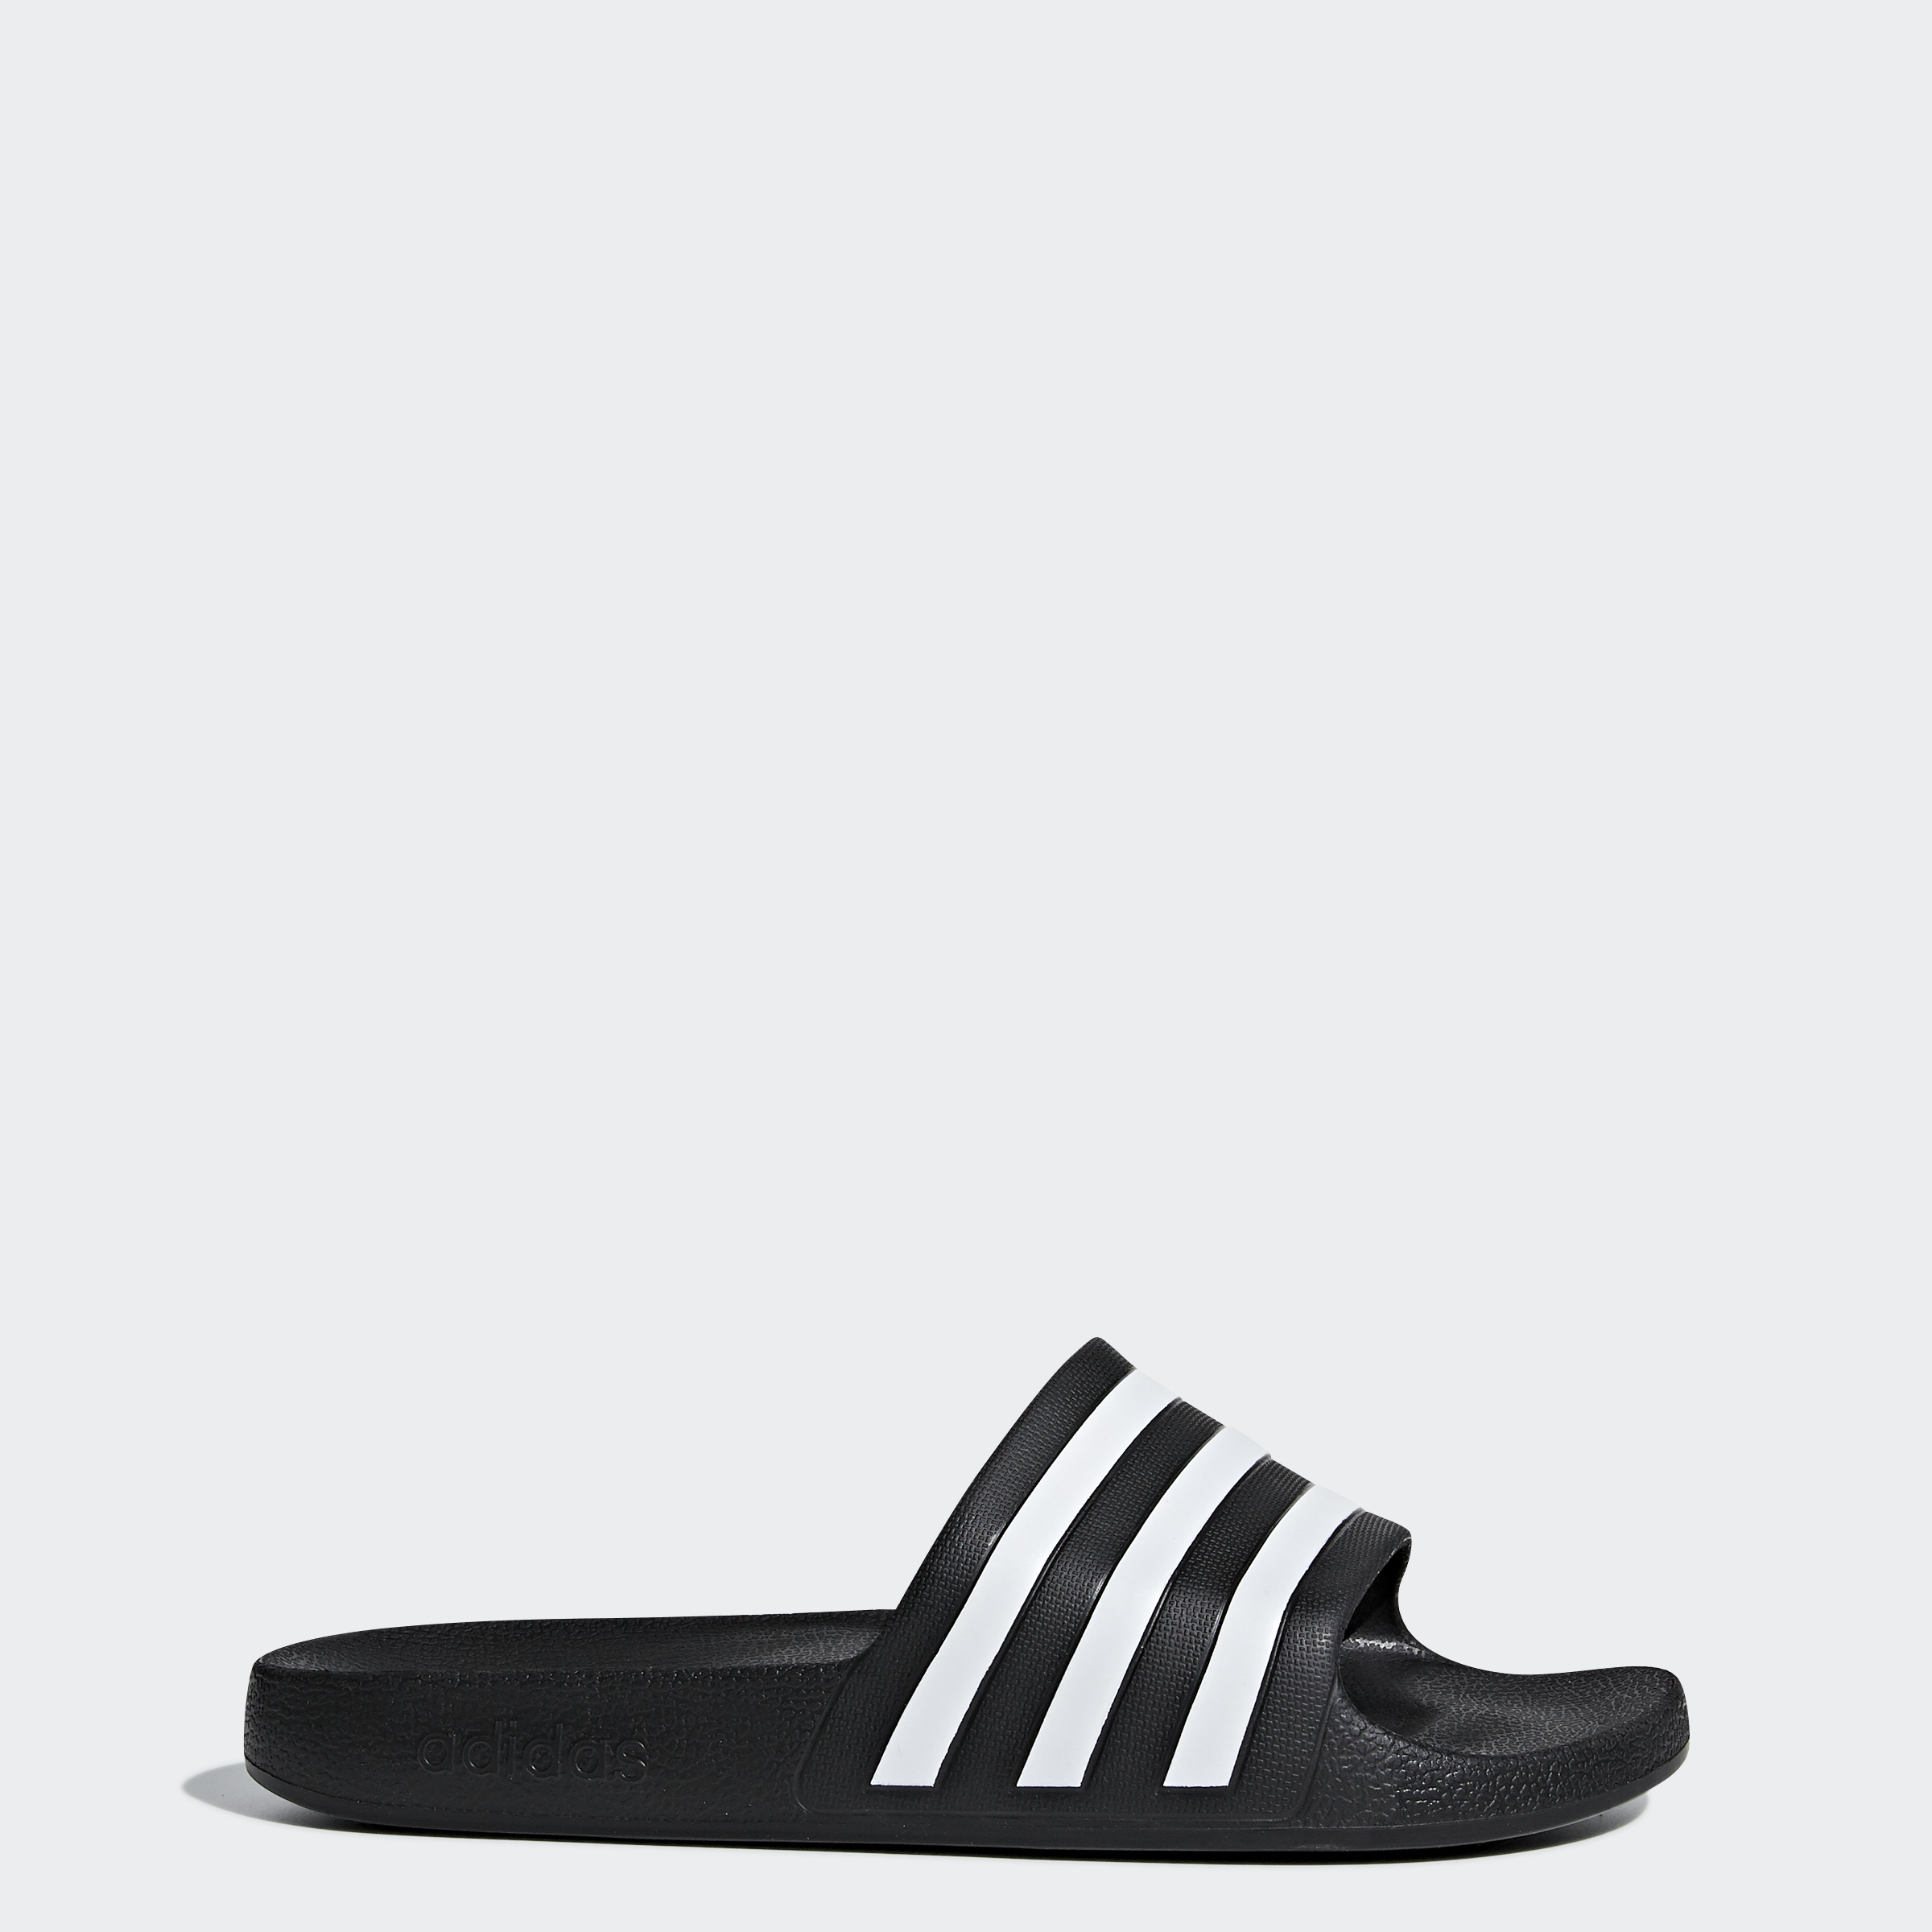 adidas Slides Sandals Slipper - Black for sale online | eBay